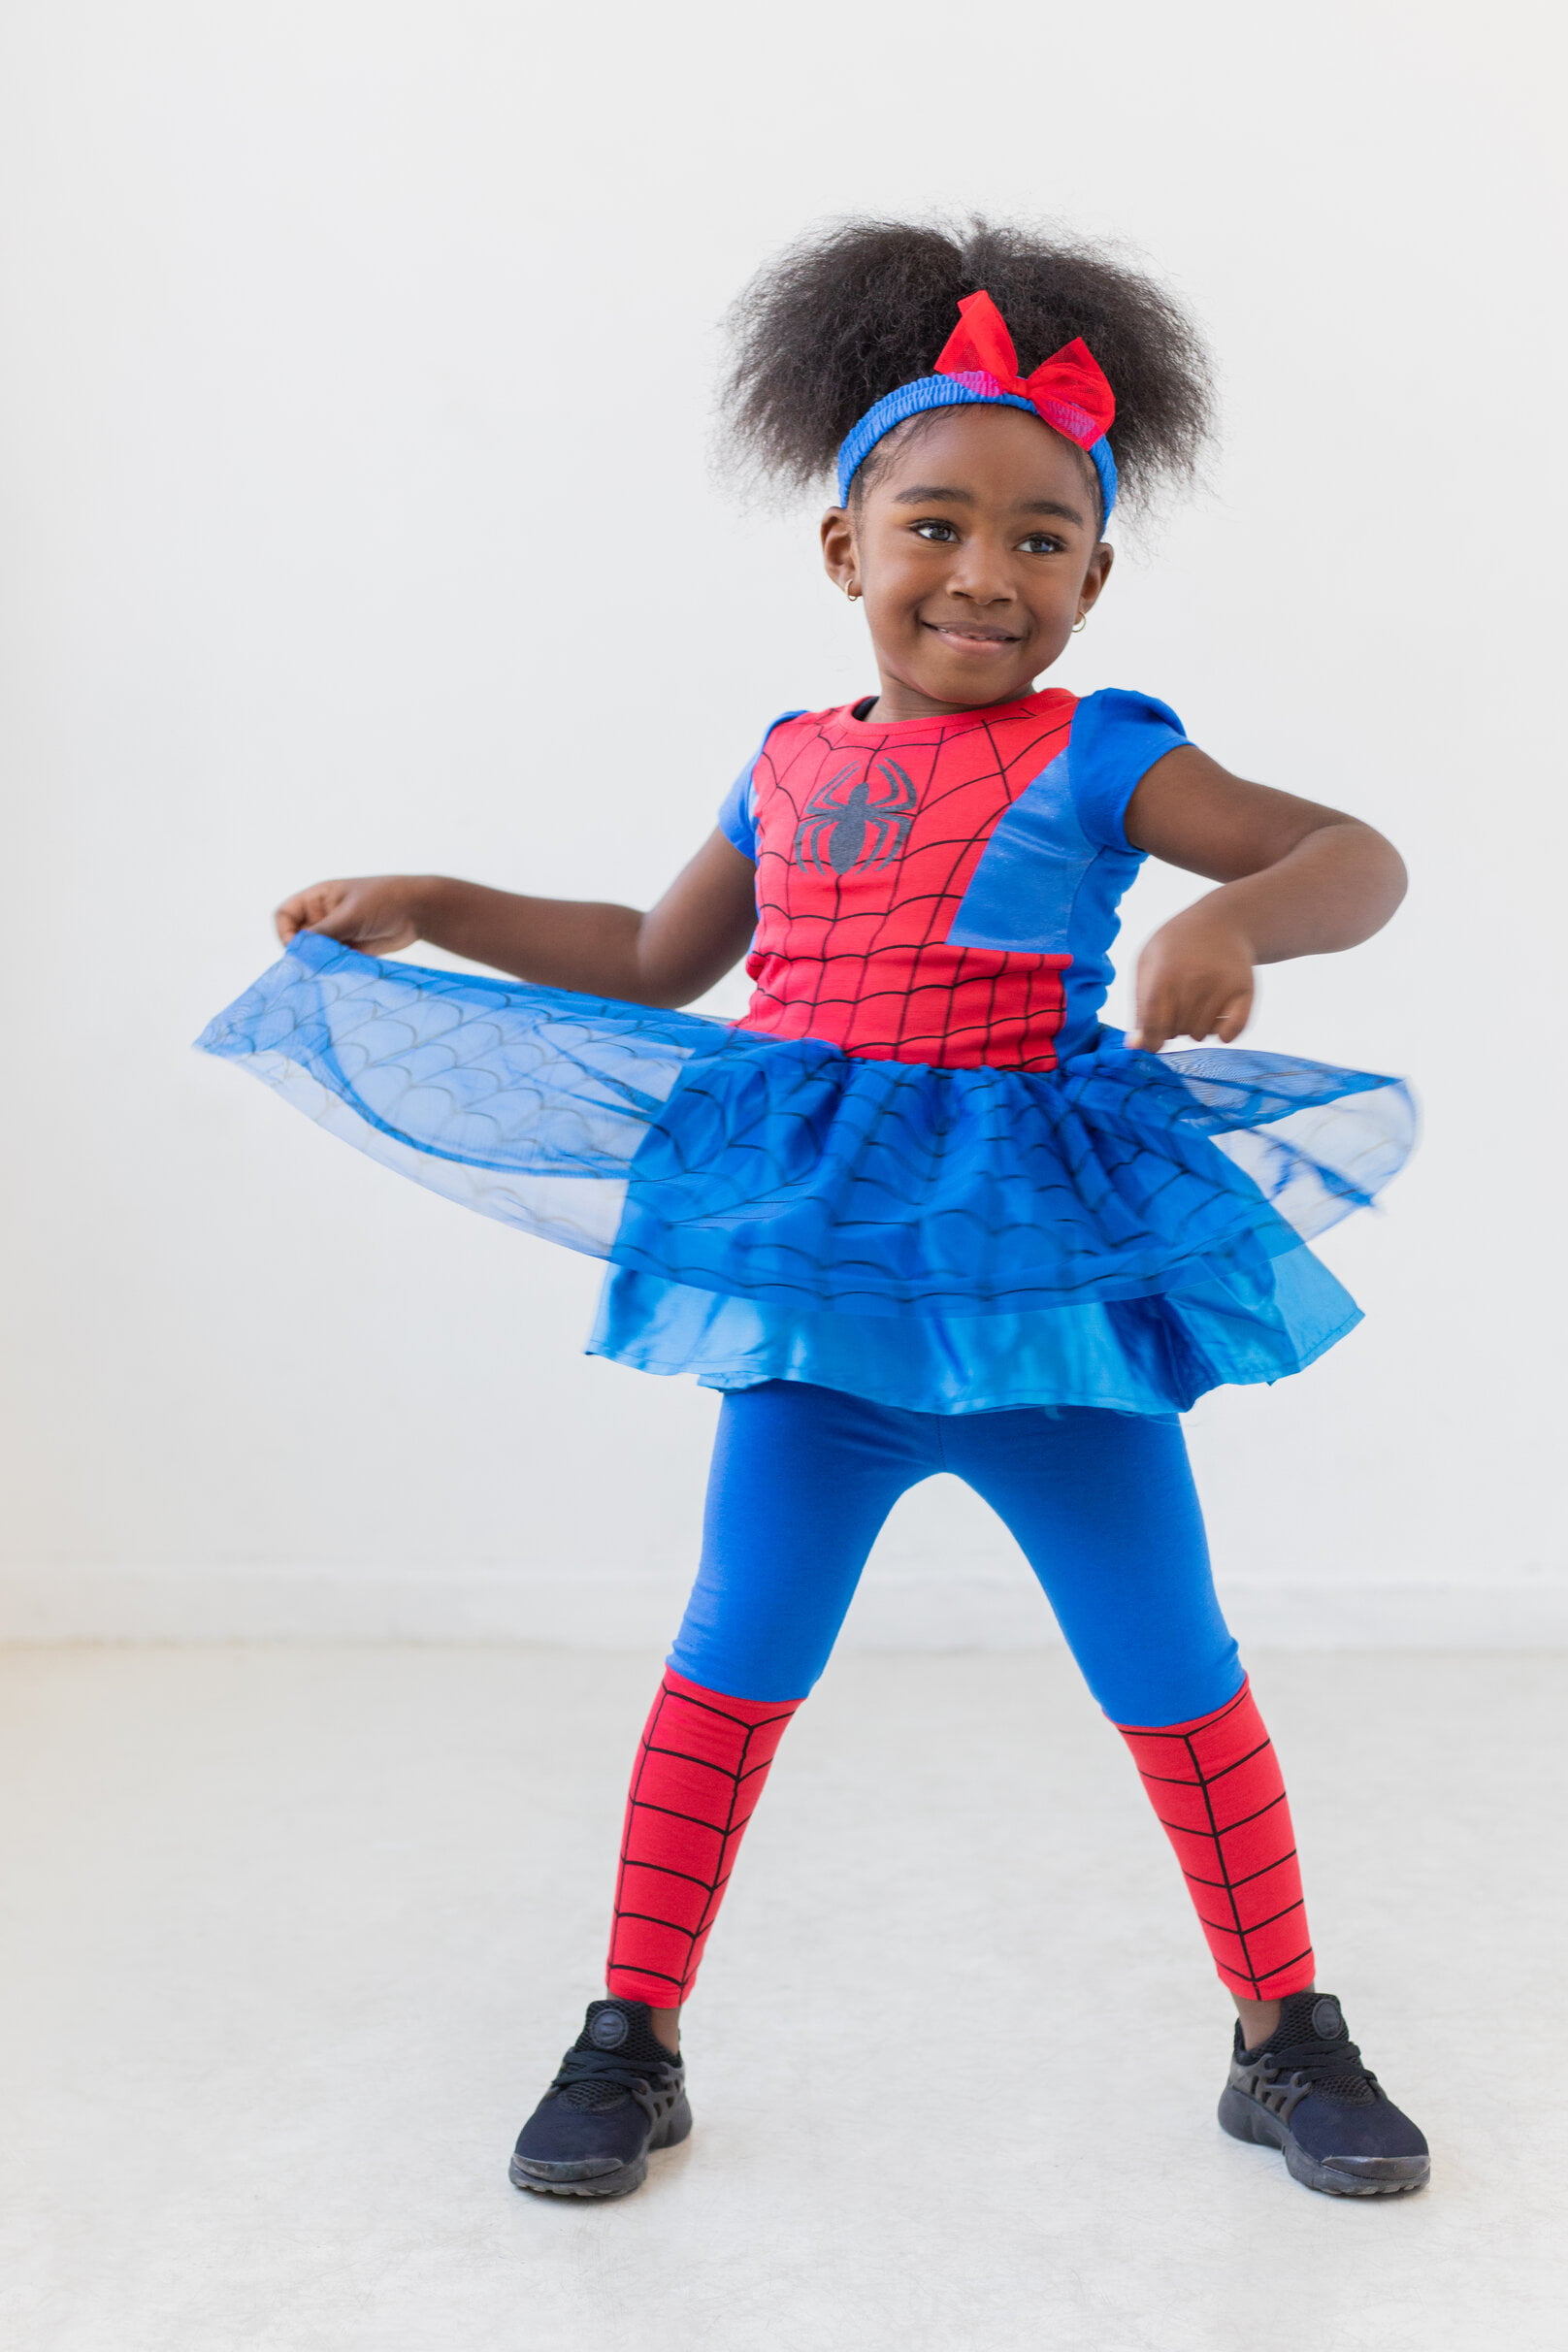 Spider-Man Miles Morales Boy's Halloween Fancy-Dress Costume for Child, S -  Walmart.com